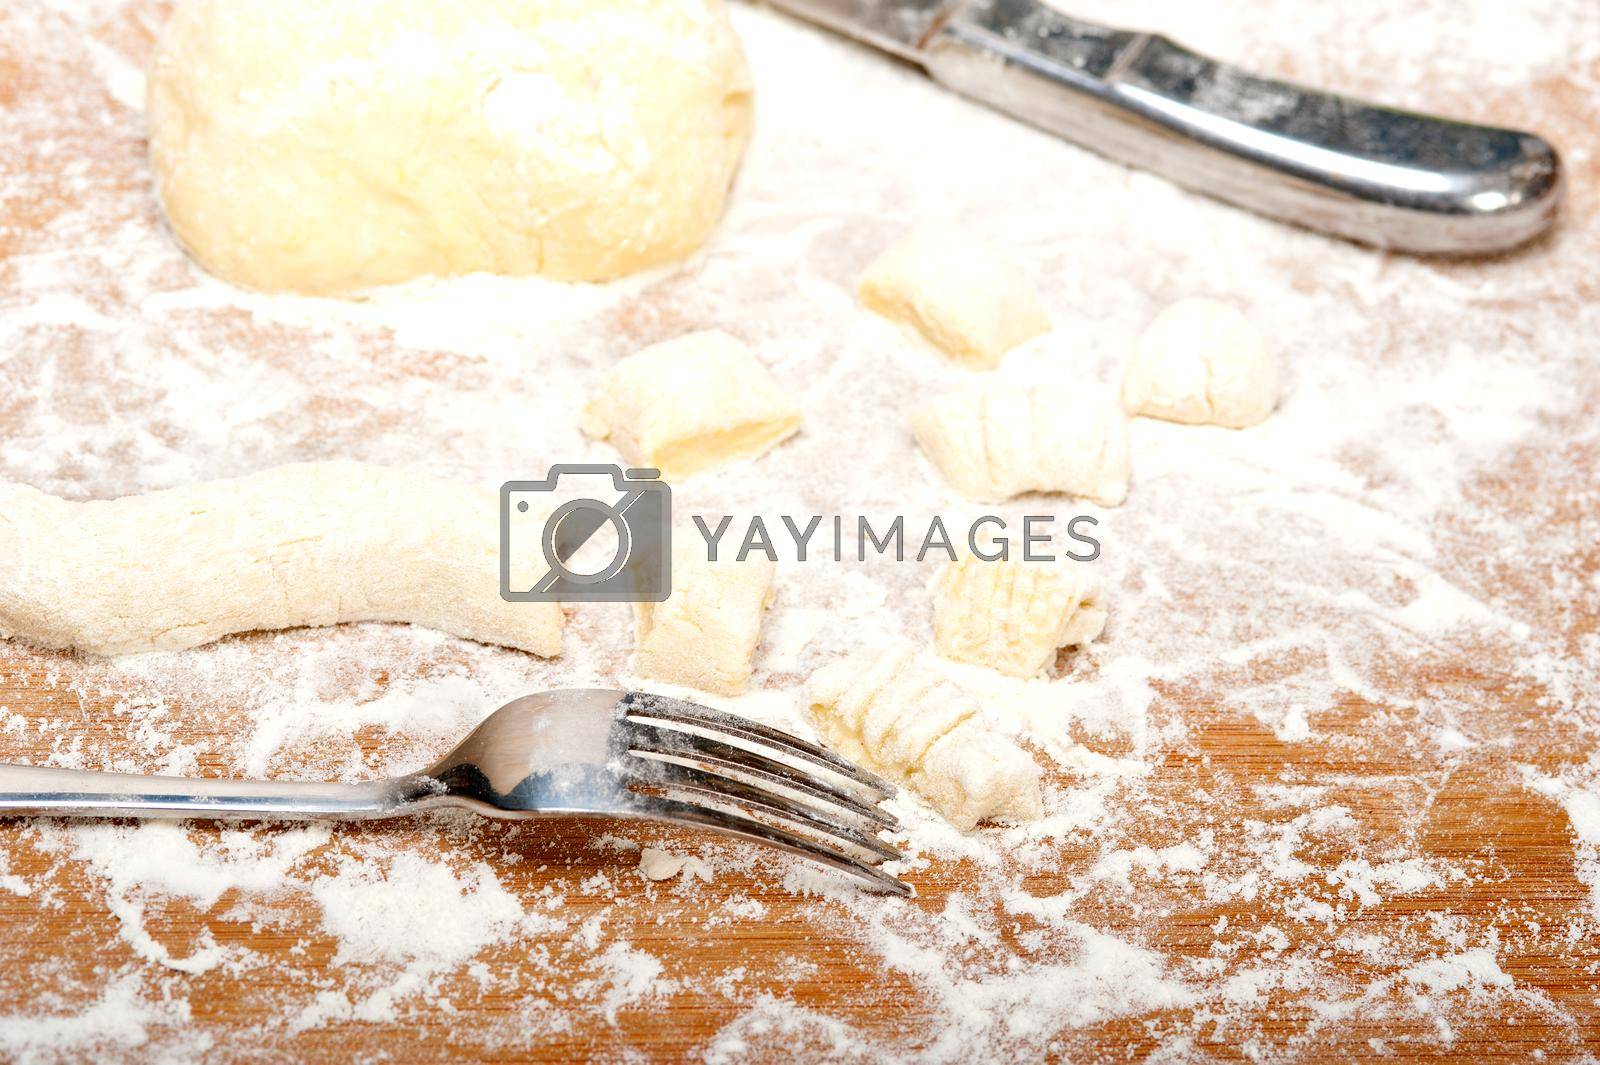 Royalty free image of making fresh Italian potato gnocchi by keko64